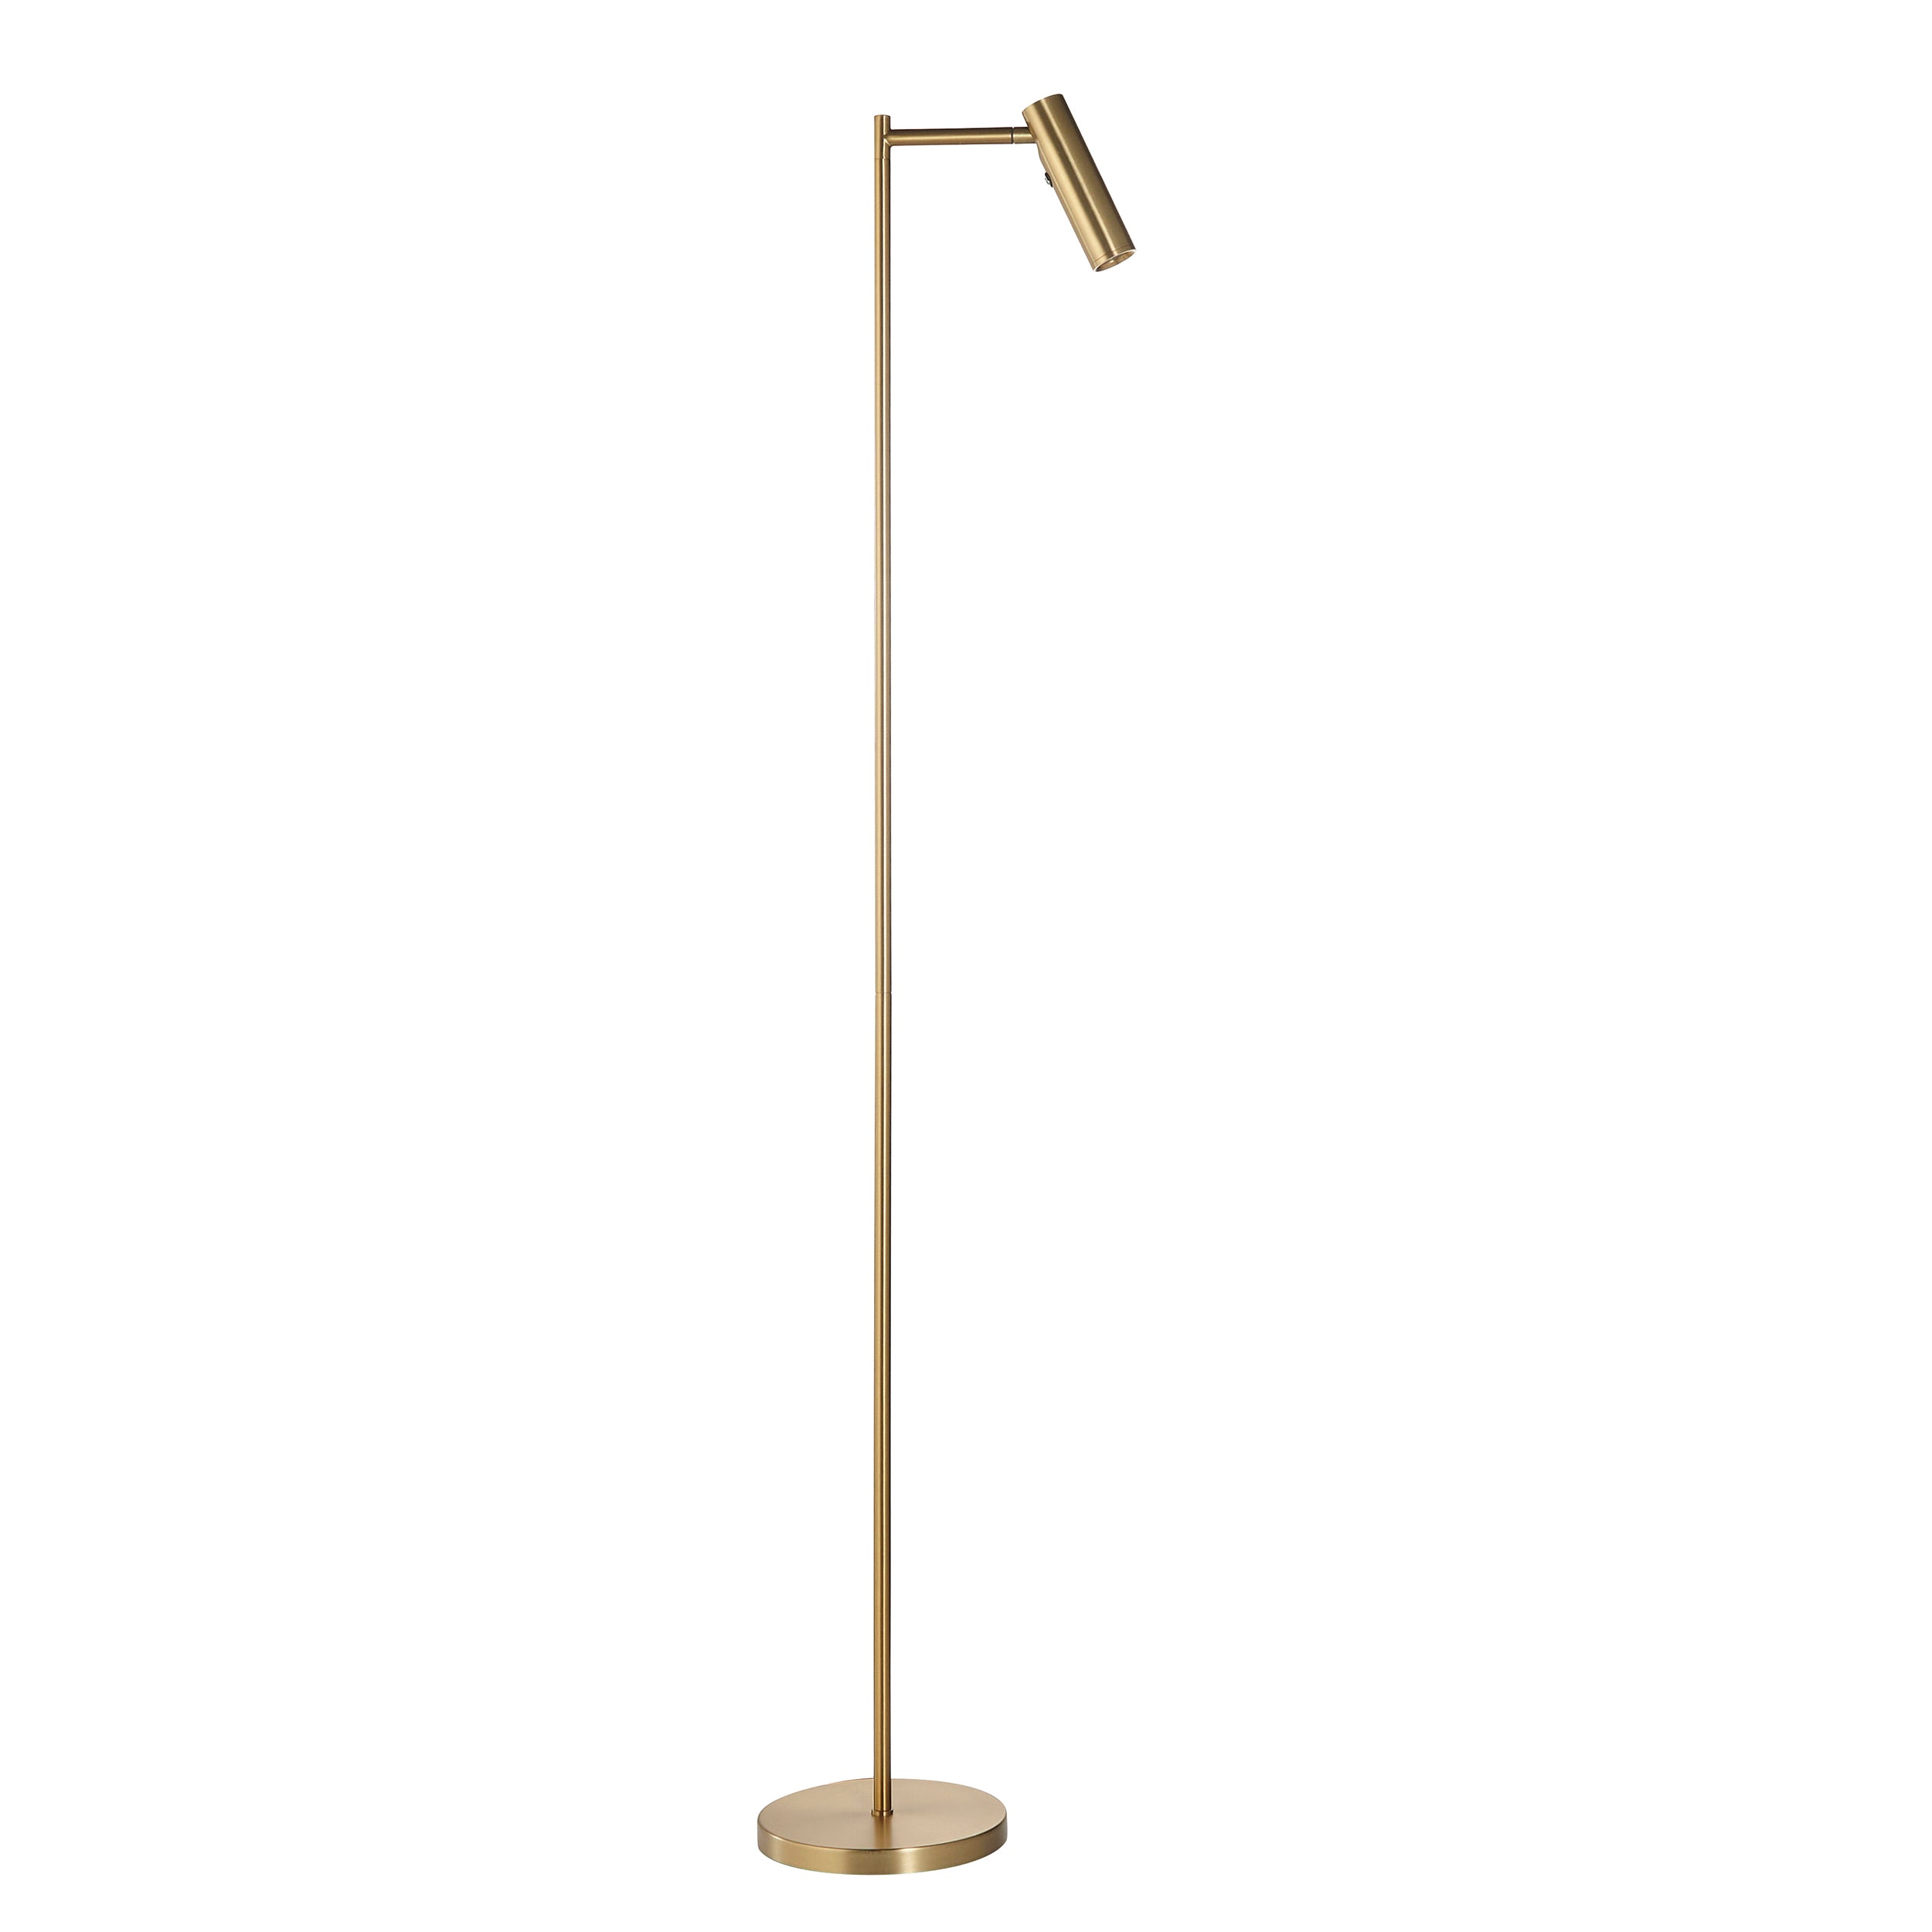 Modern Reader Floor Lamp in Warm Brass with Adjustable Head